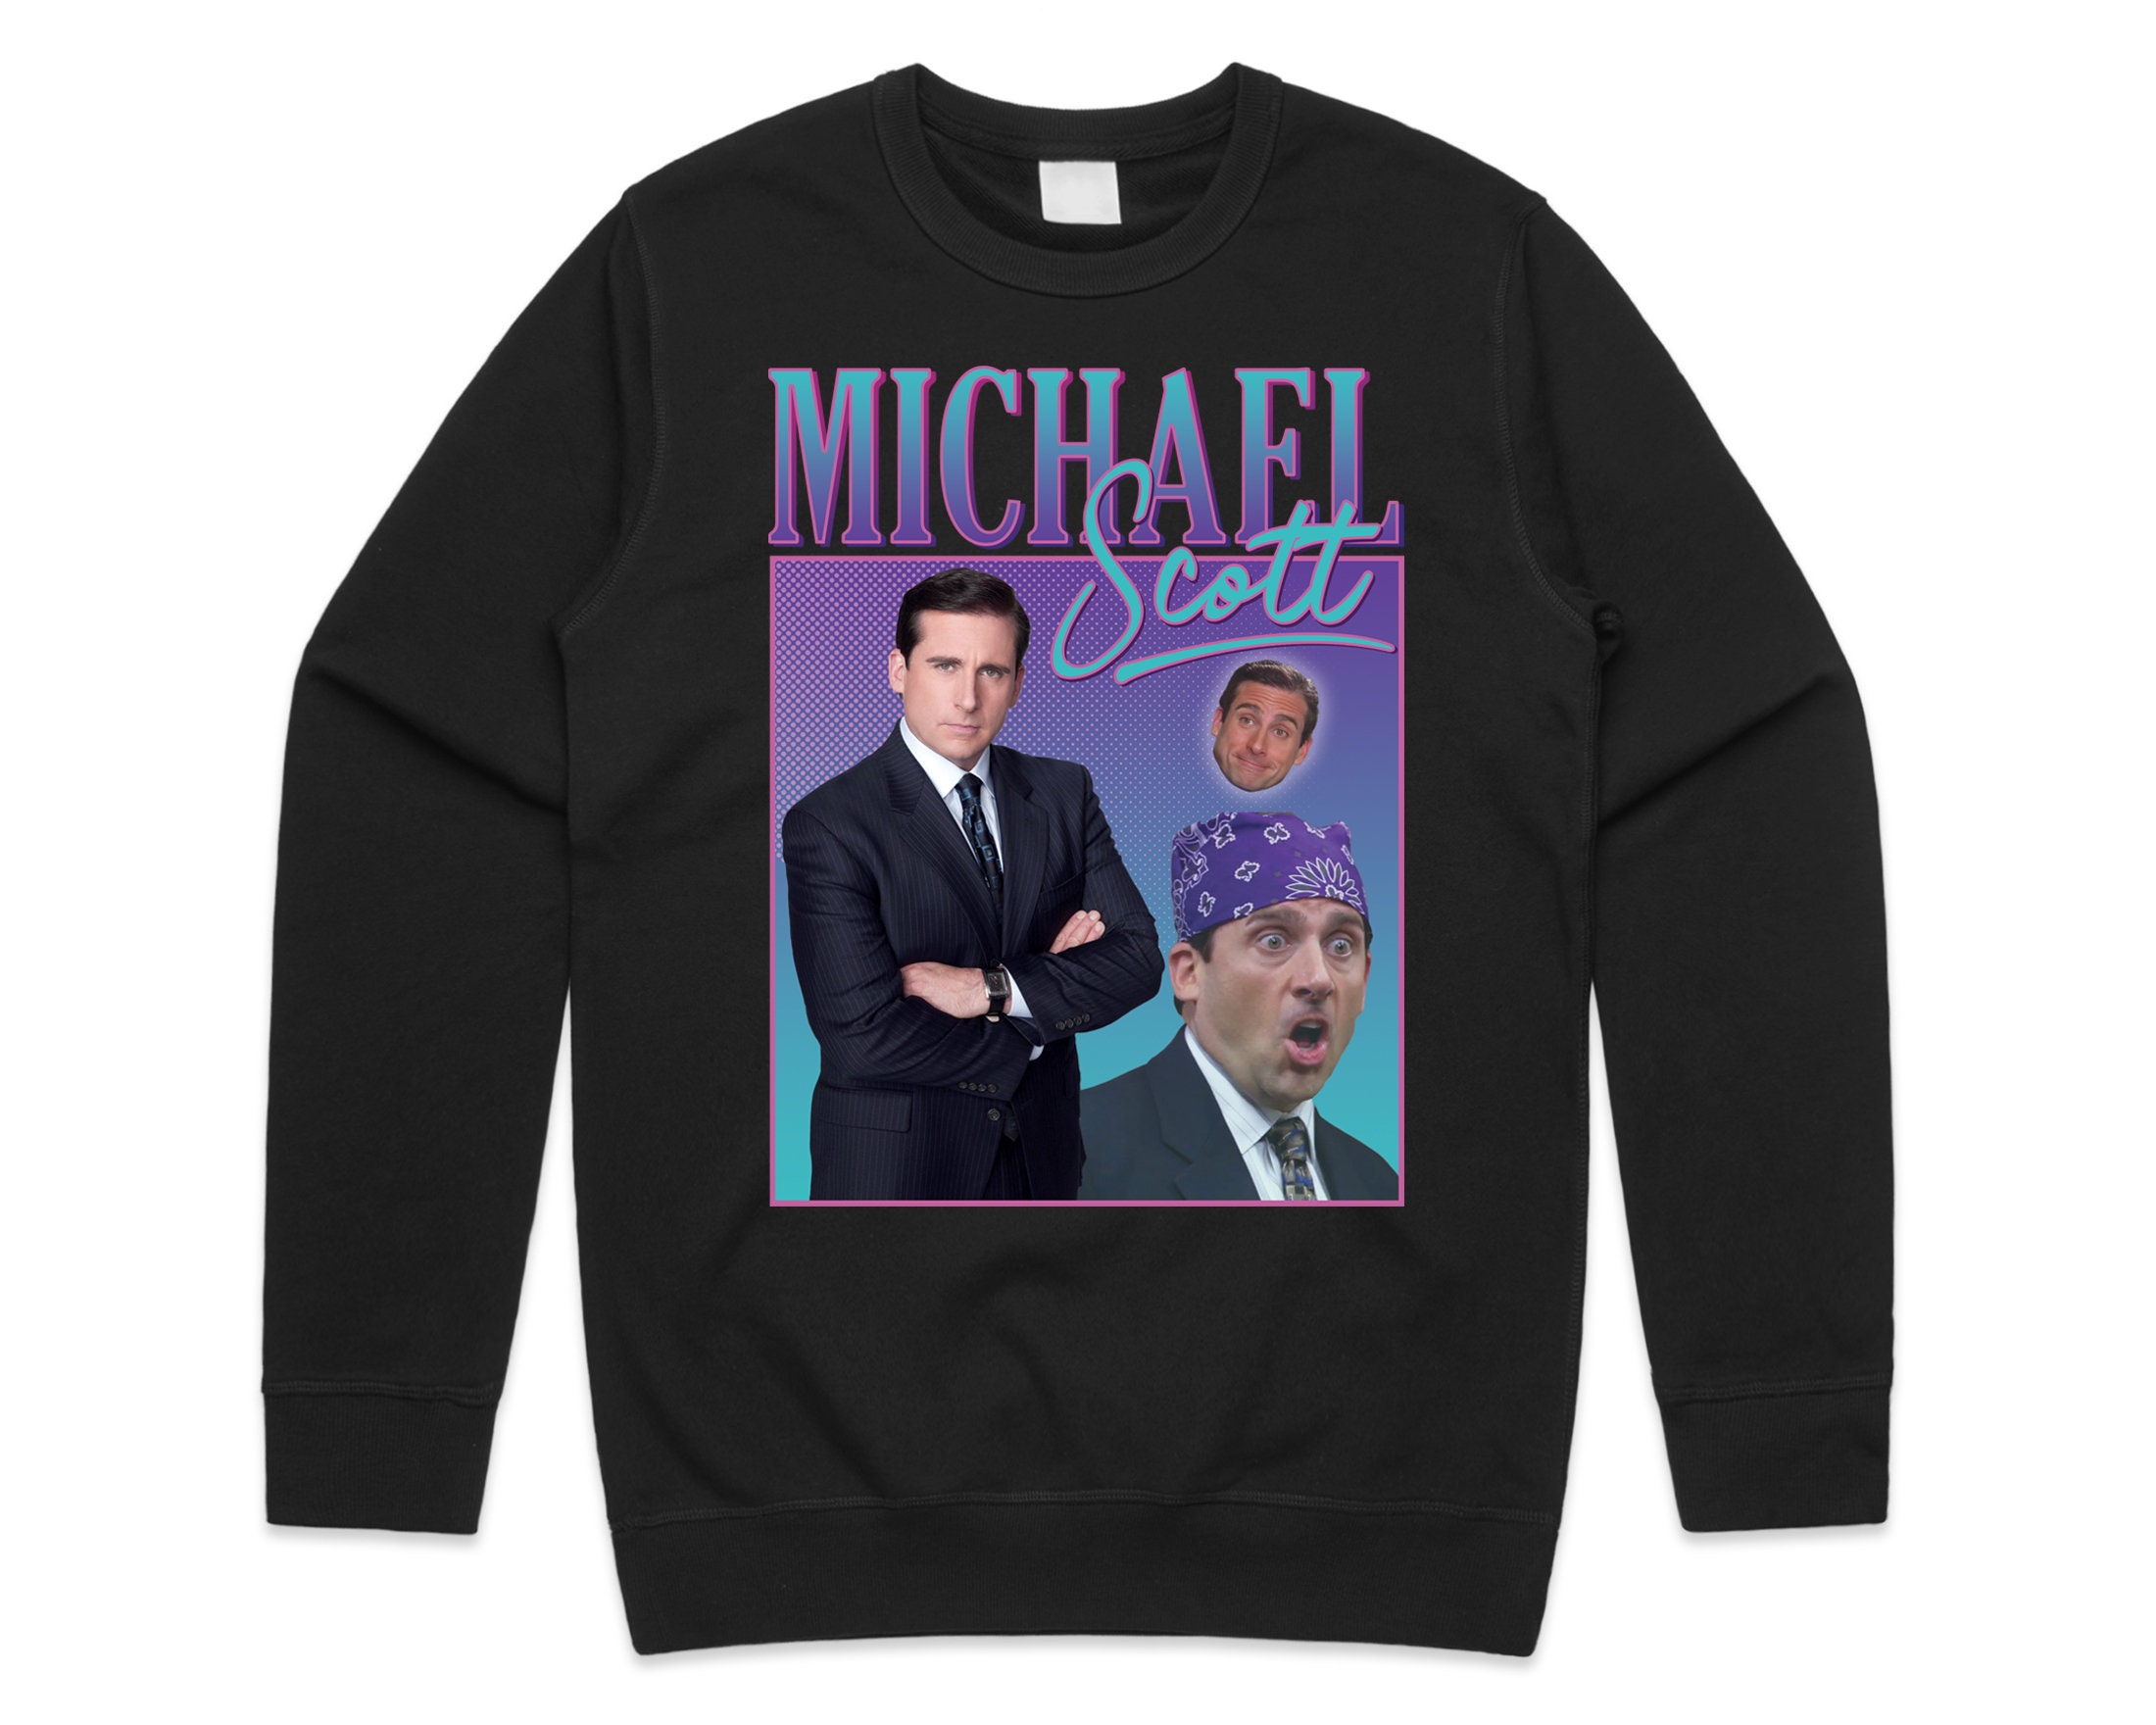 Michael Scott Homage Jumper Sweater Sweatshirt Us Office Tv Show Retro 90’s Vintage Funny